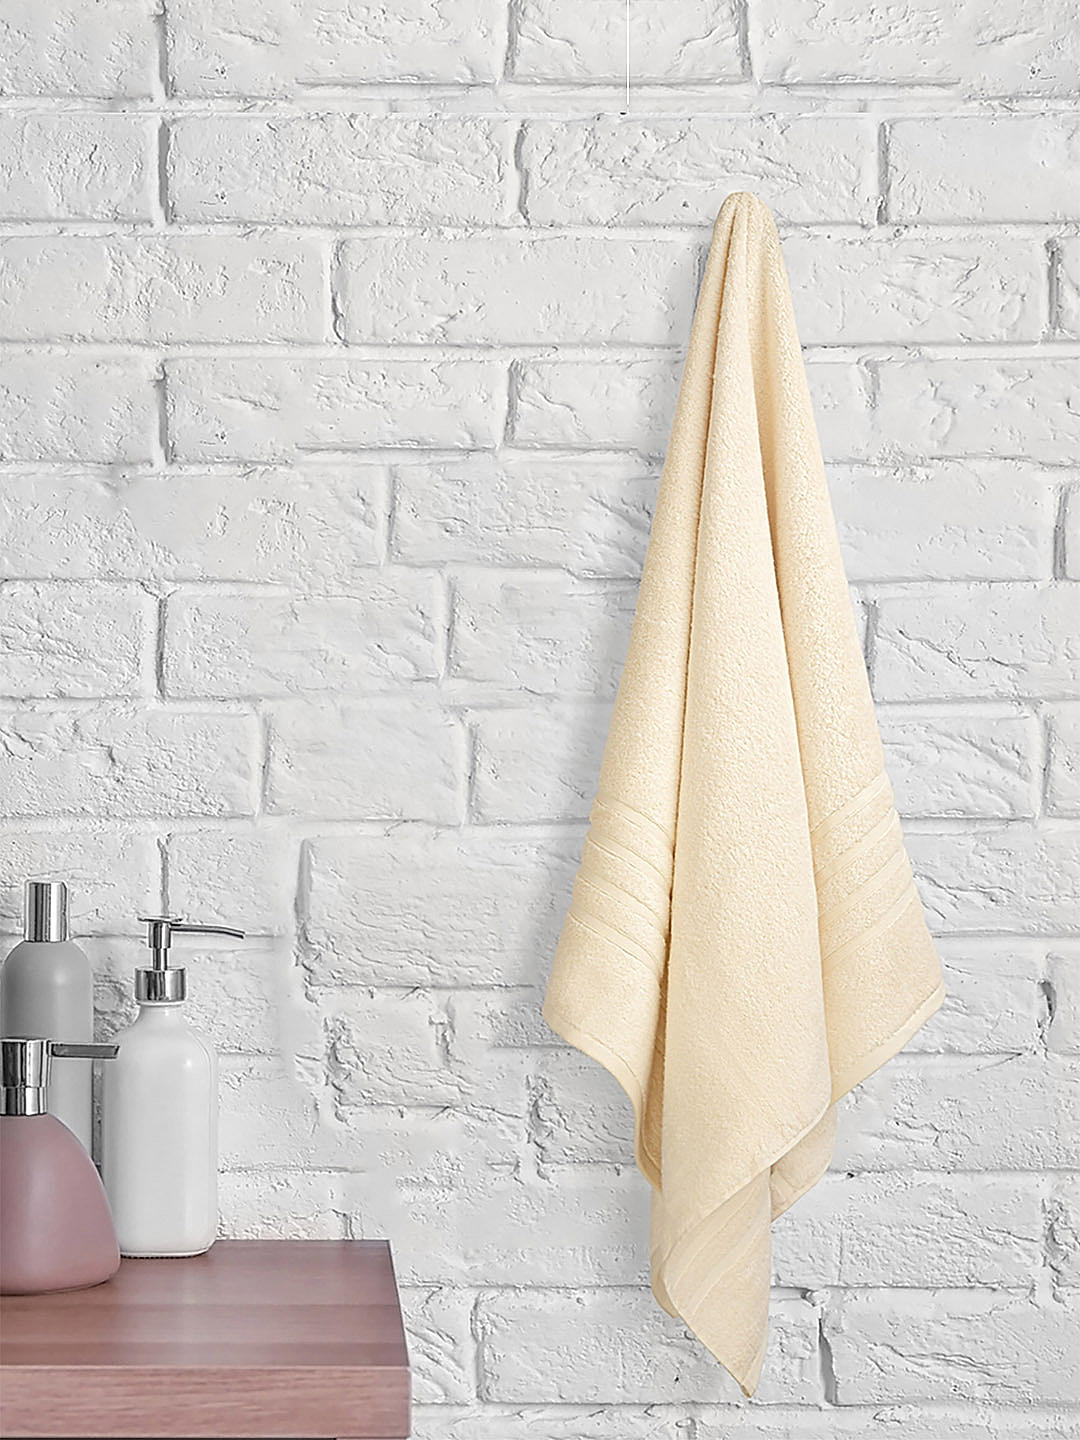 Kalpavriksha 550 gsm 100% Organic Cotton Soft & Fluffy Ivory Colored Bath Towel